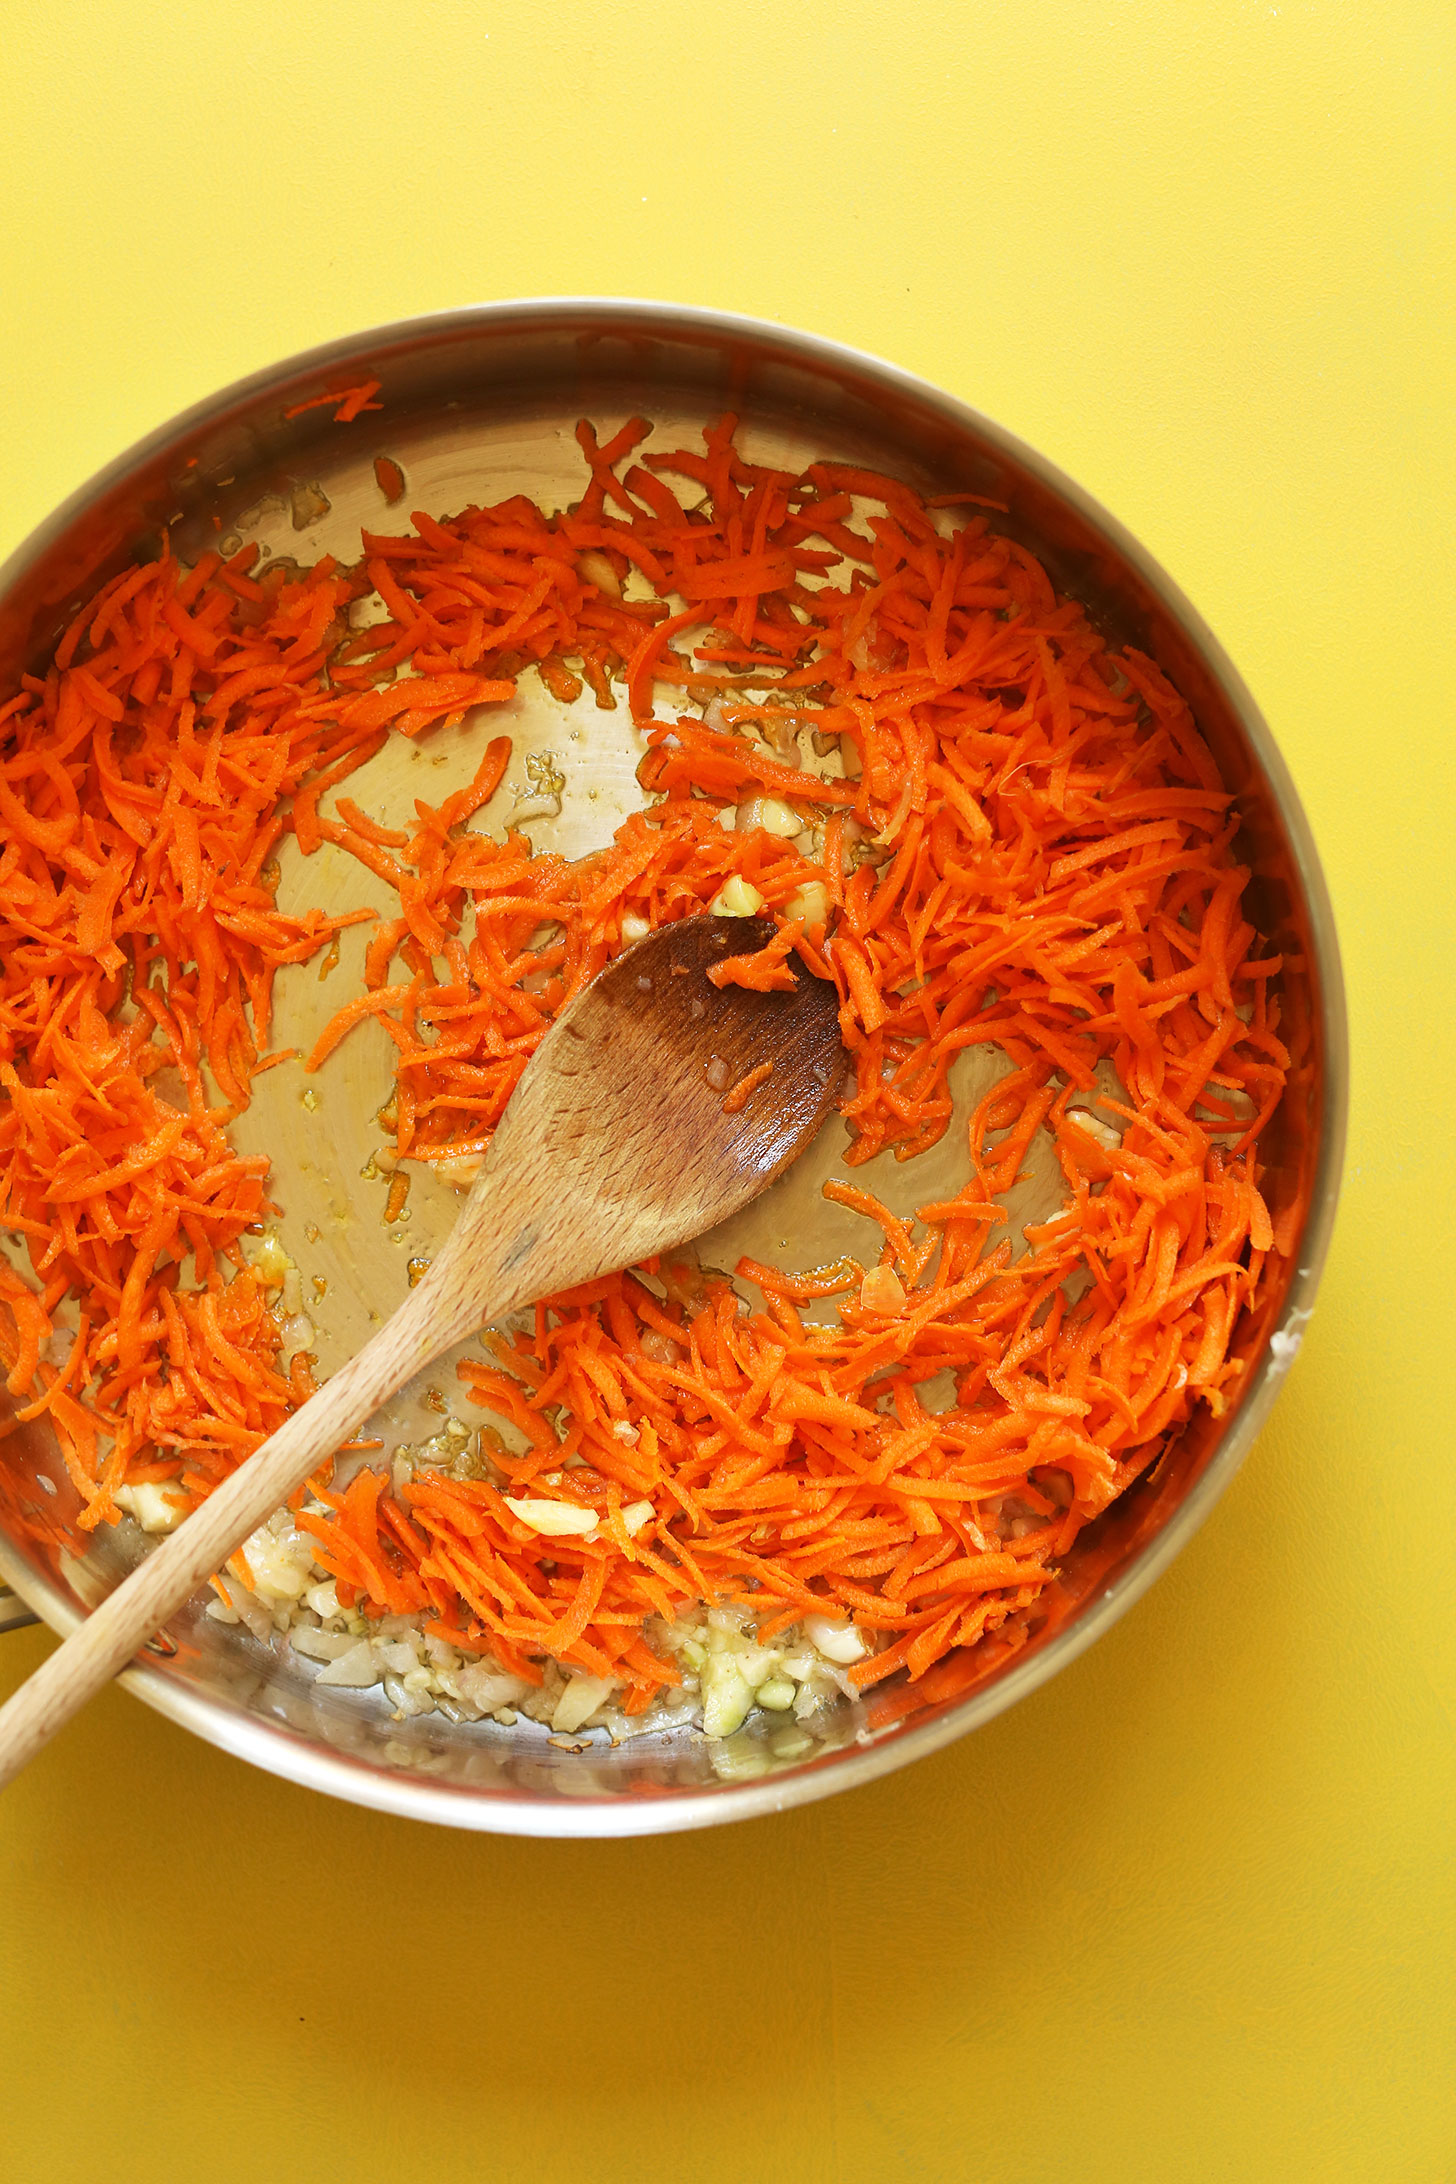 Sautéing carrots to make healthy vegan Bolognese